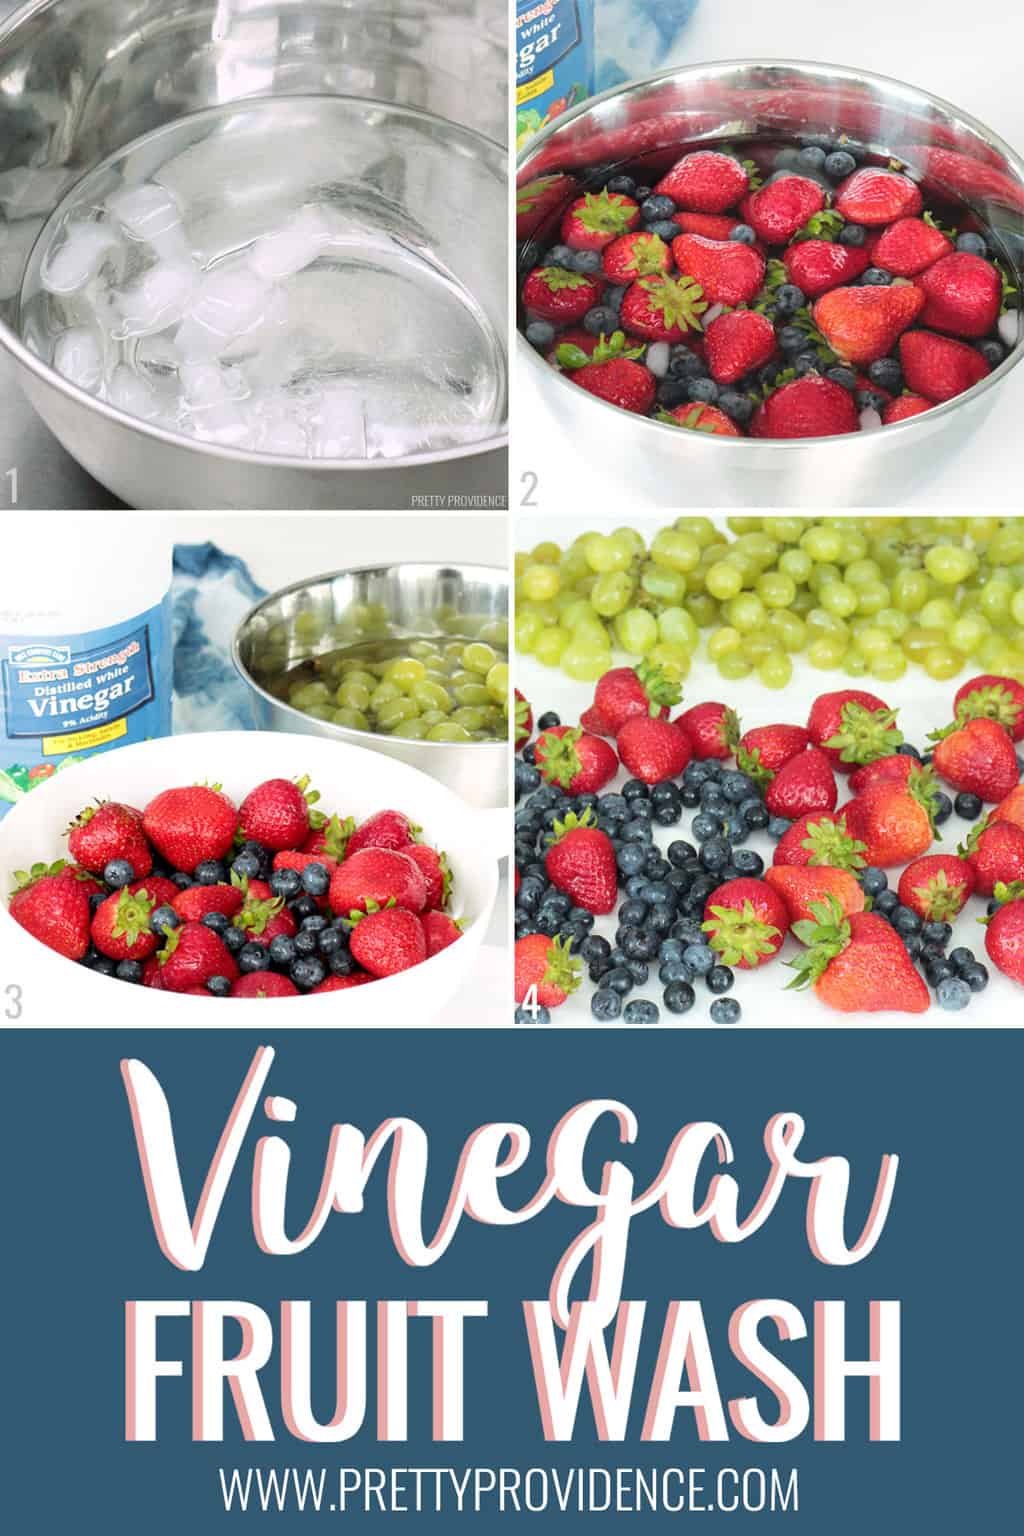 Vinegar Fruit Wash